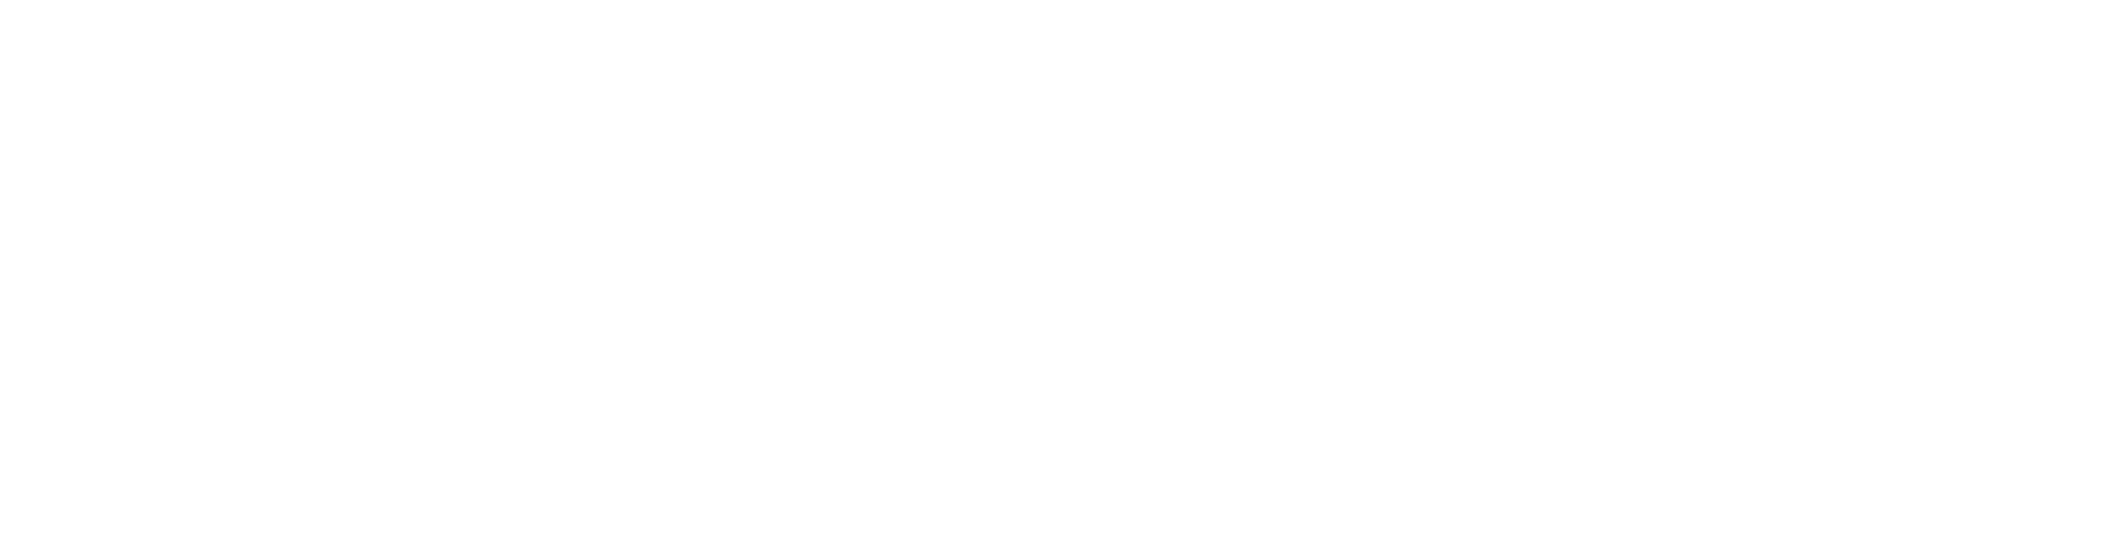 Effysens Logo